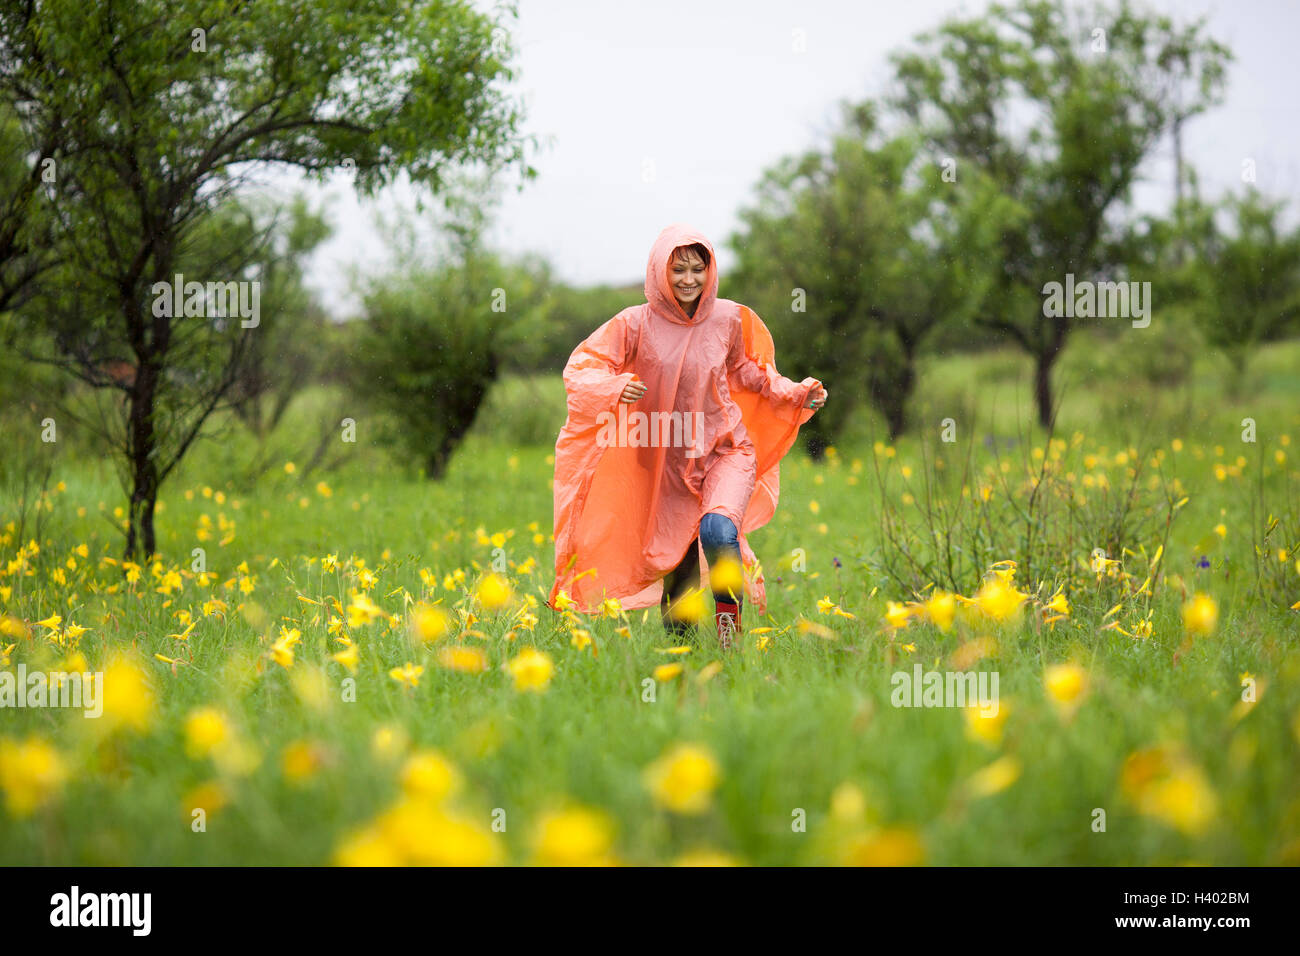 Woman wearing raincoat running amidst yellow flowering plants in rainy season Stock Photo